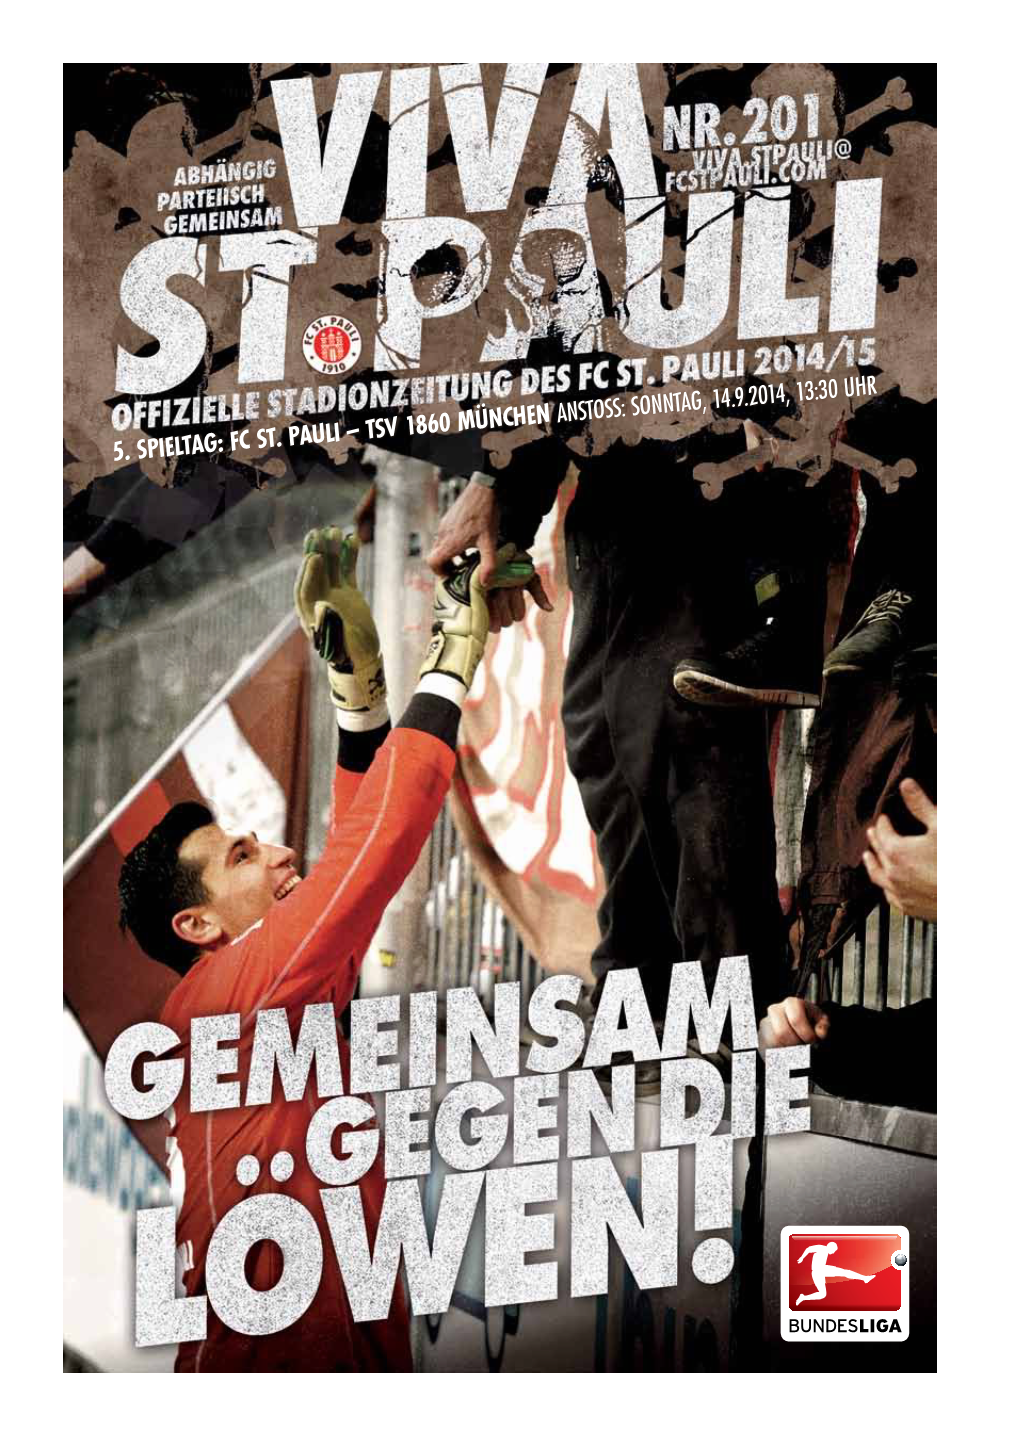 5. Spieltag: FC St. Pauli – Tsv 1860 München Anstoss